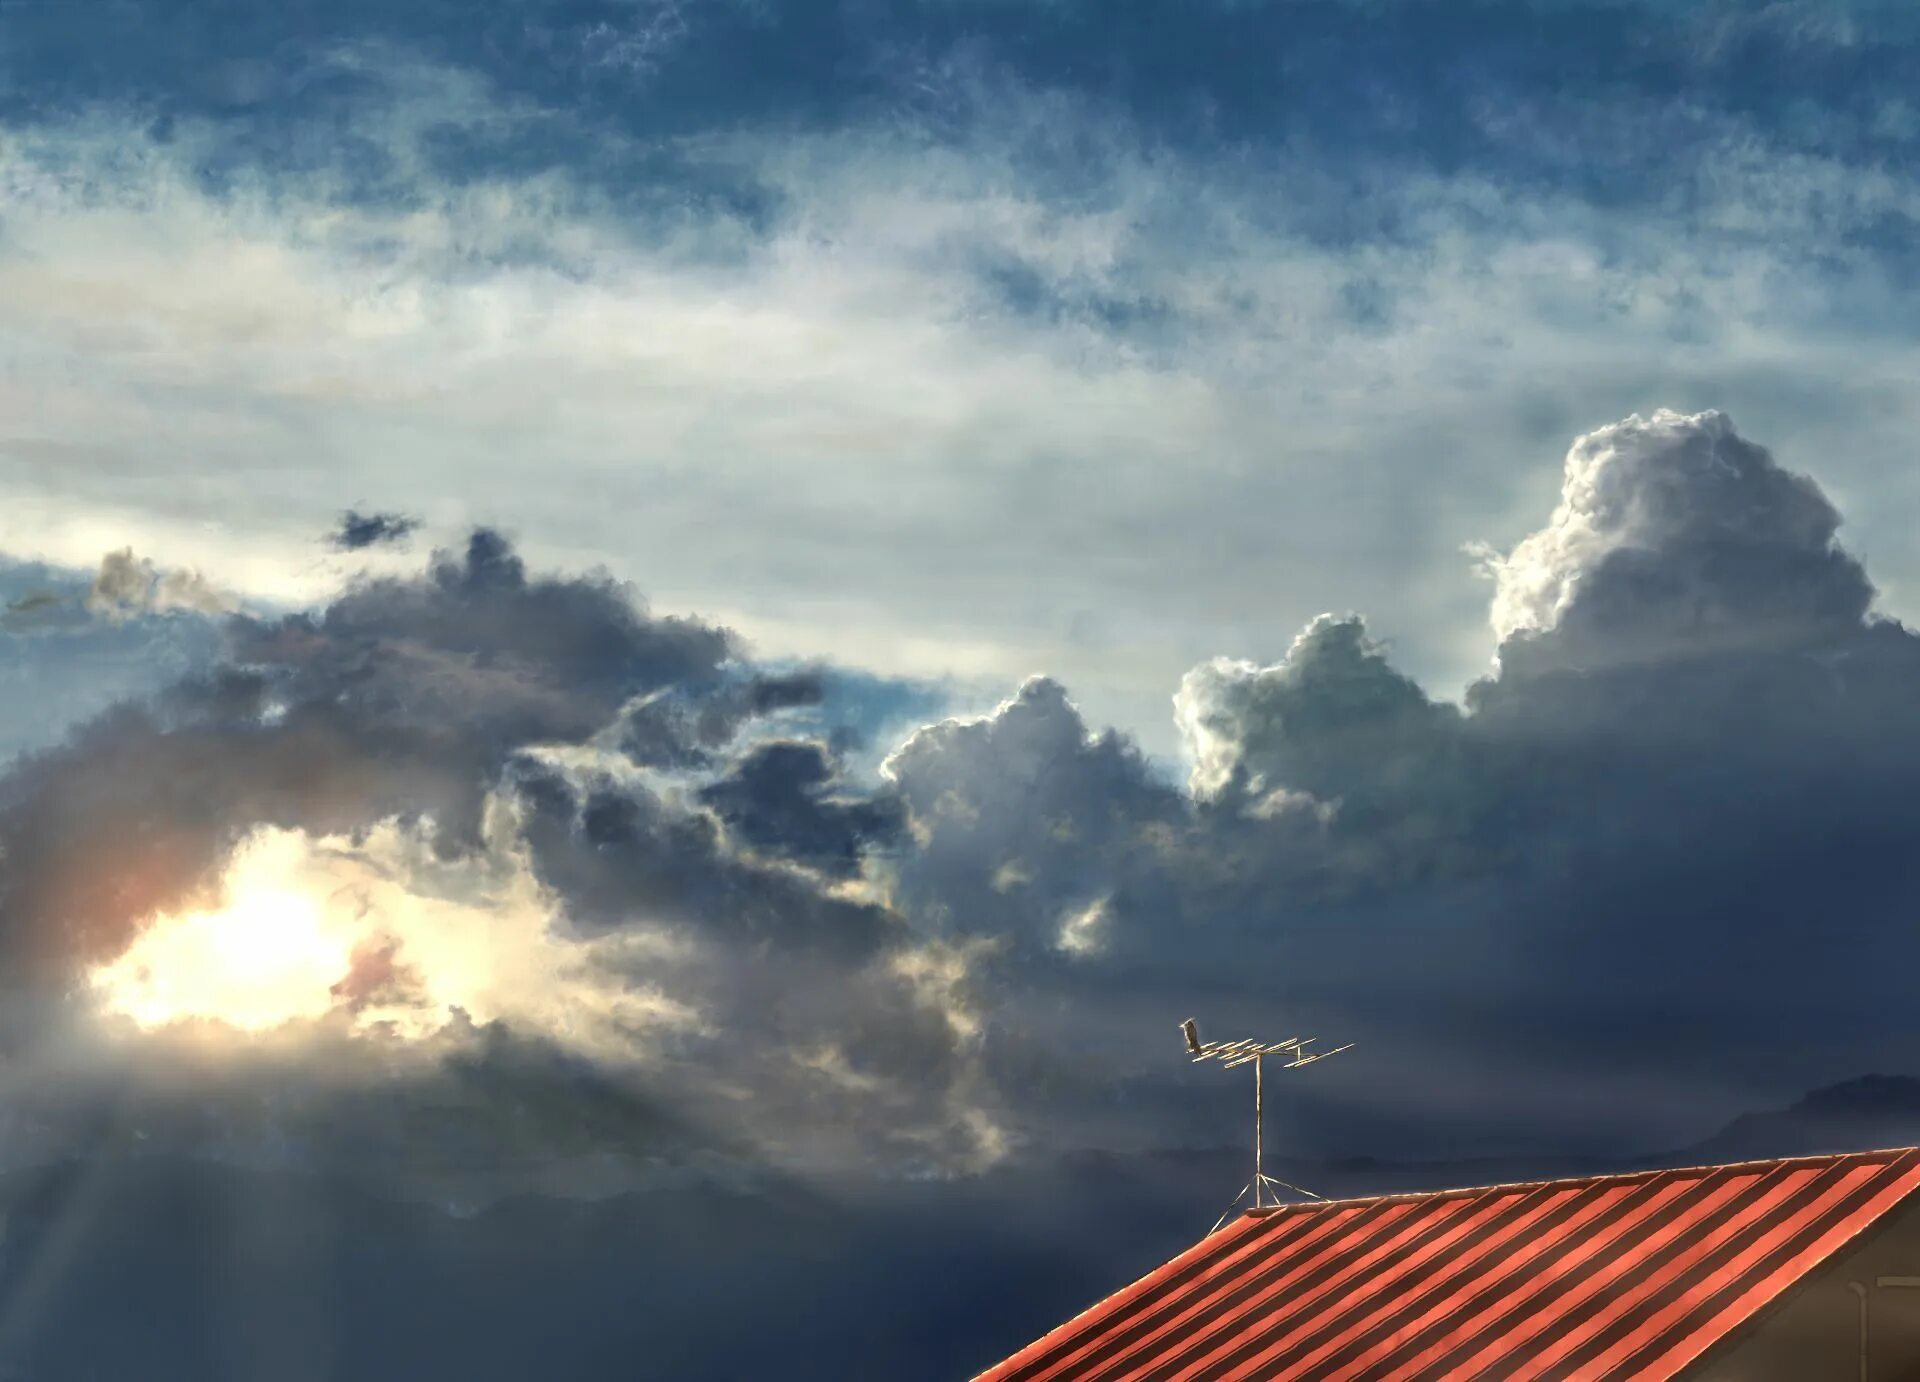 Небо с крыши. Облака над домом. Небо и крыши домов. Крыша на фоне неба. Над небосклоном